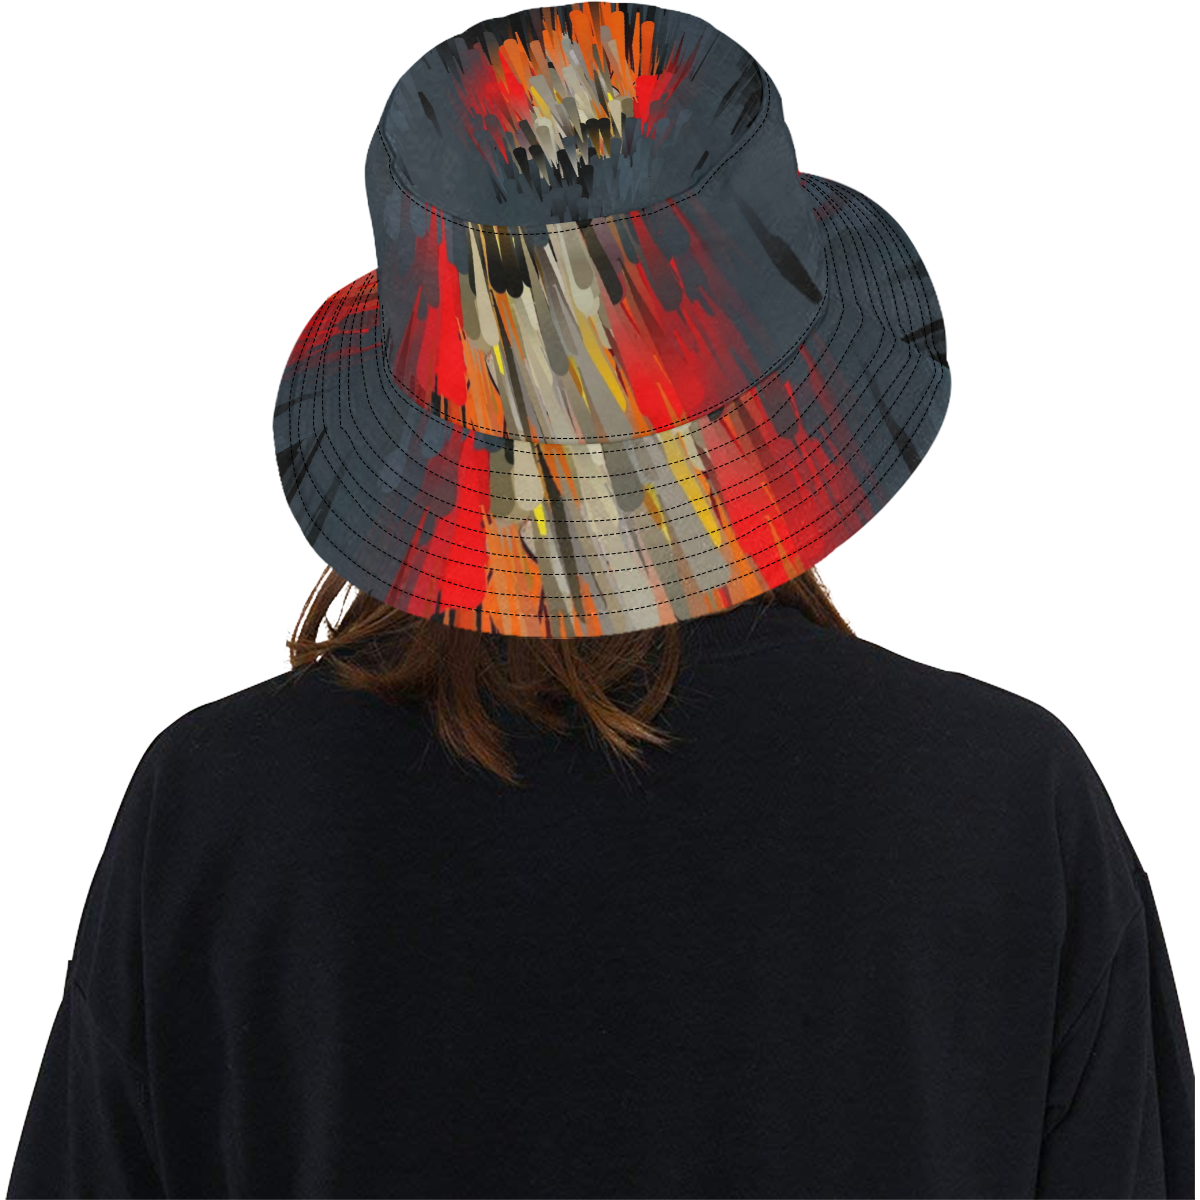 Klecks Popart" by Nico Bielow All Over Print Bucket Hat